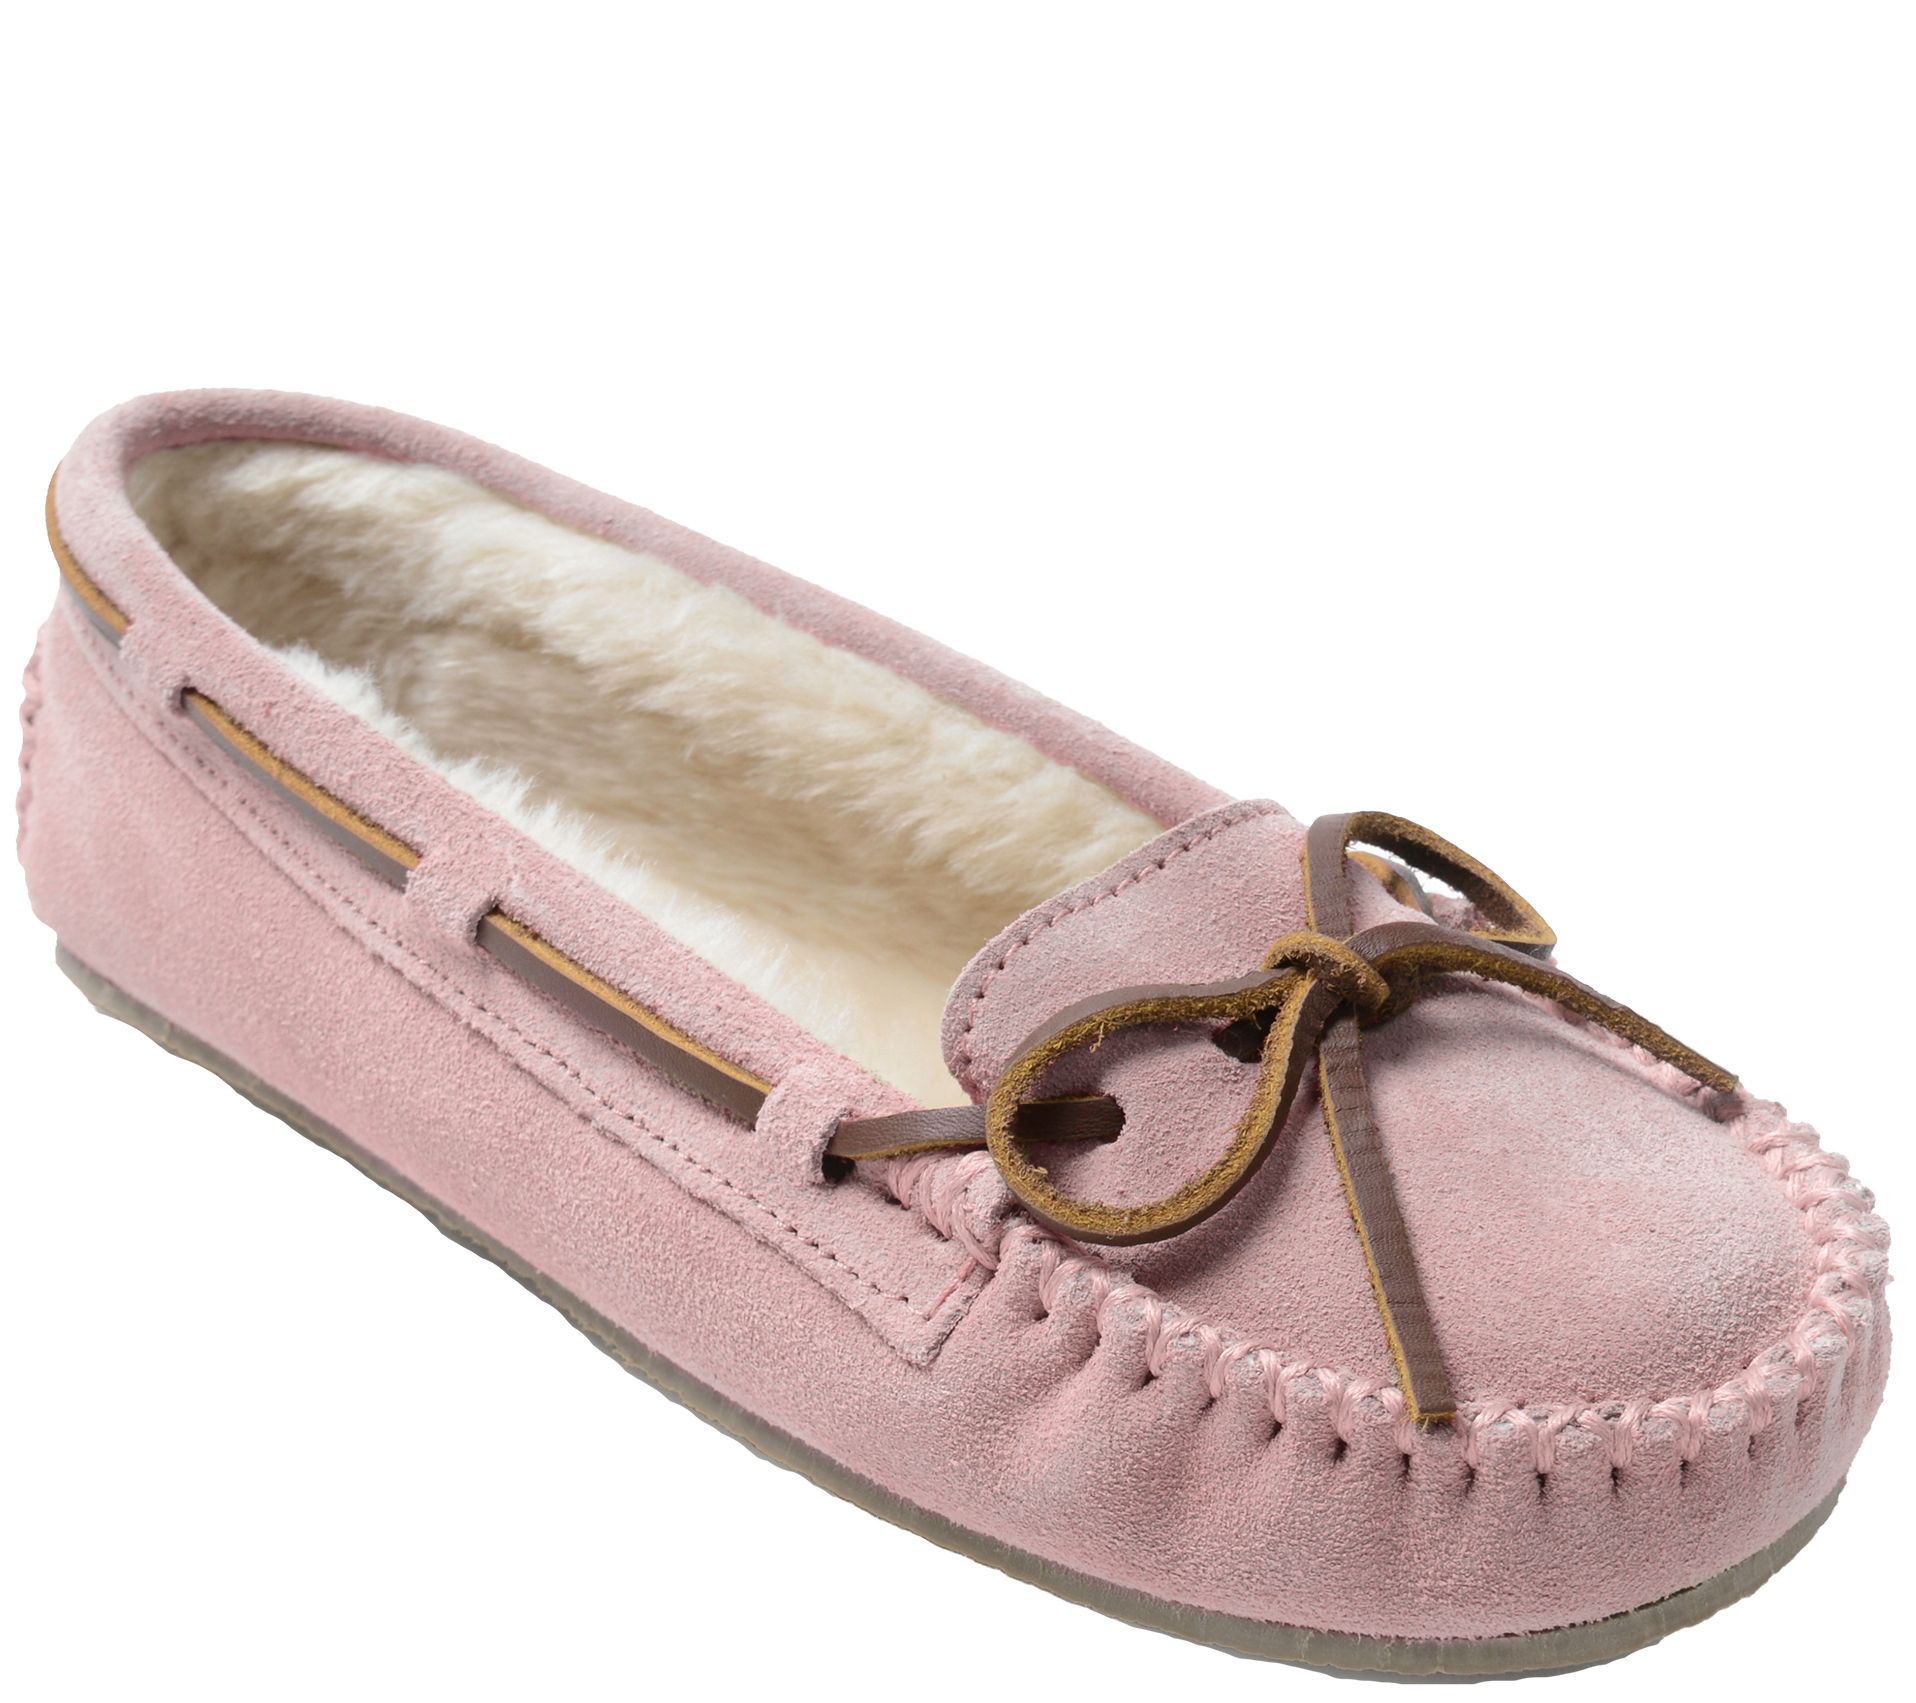 blush pink slippers